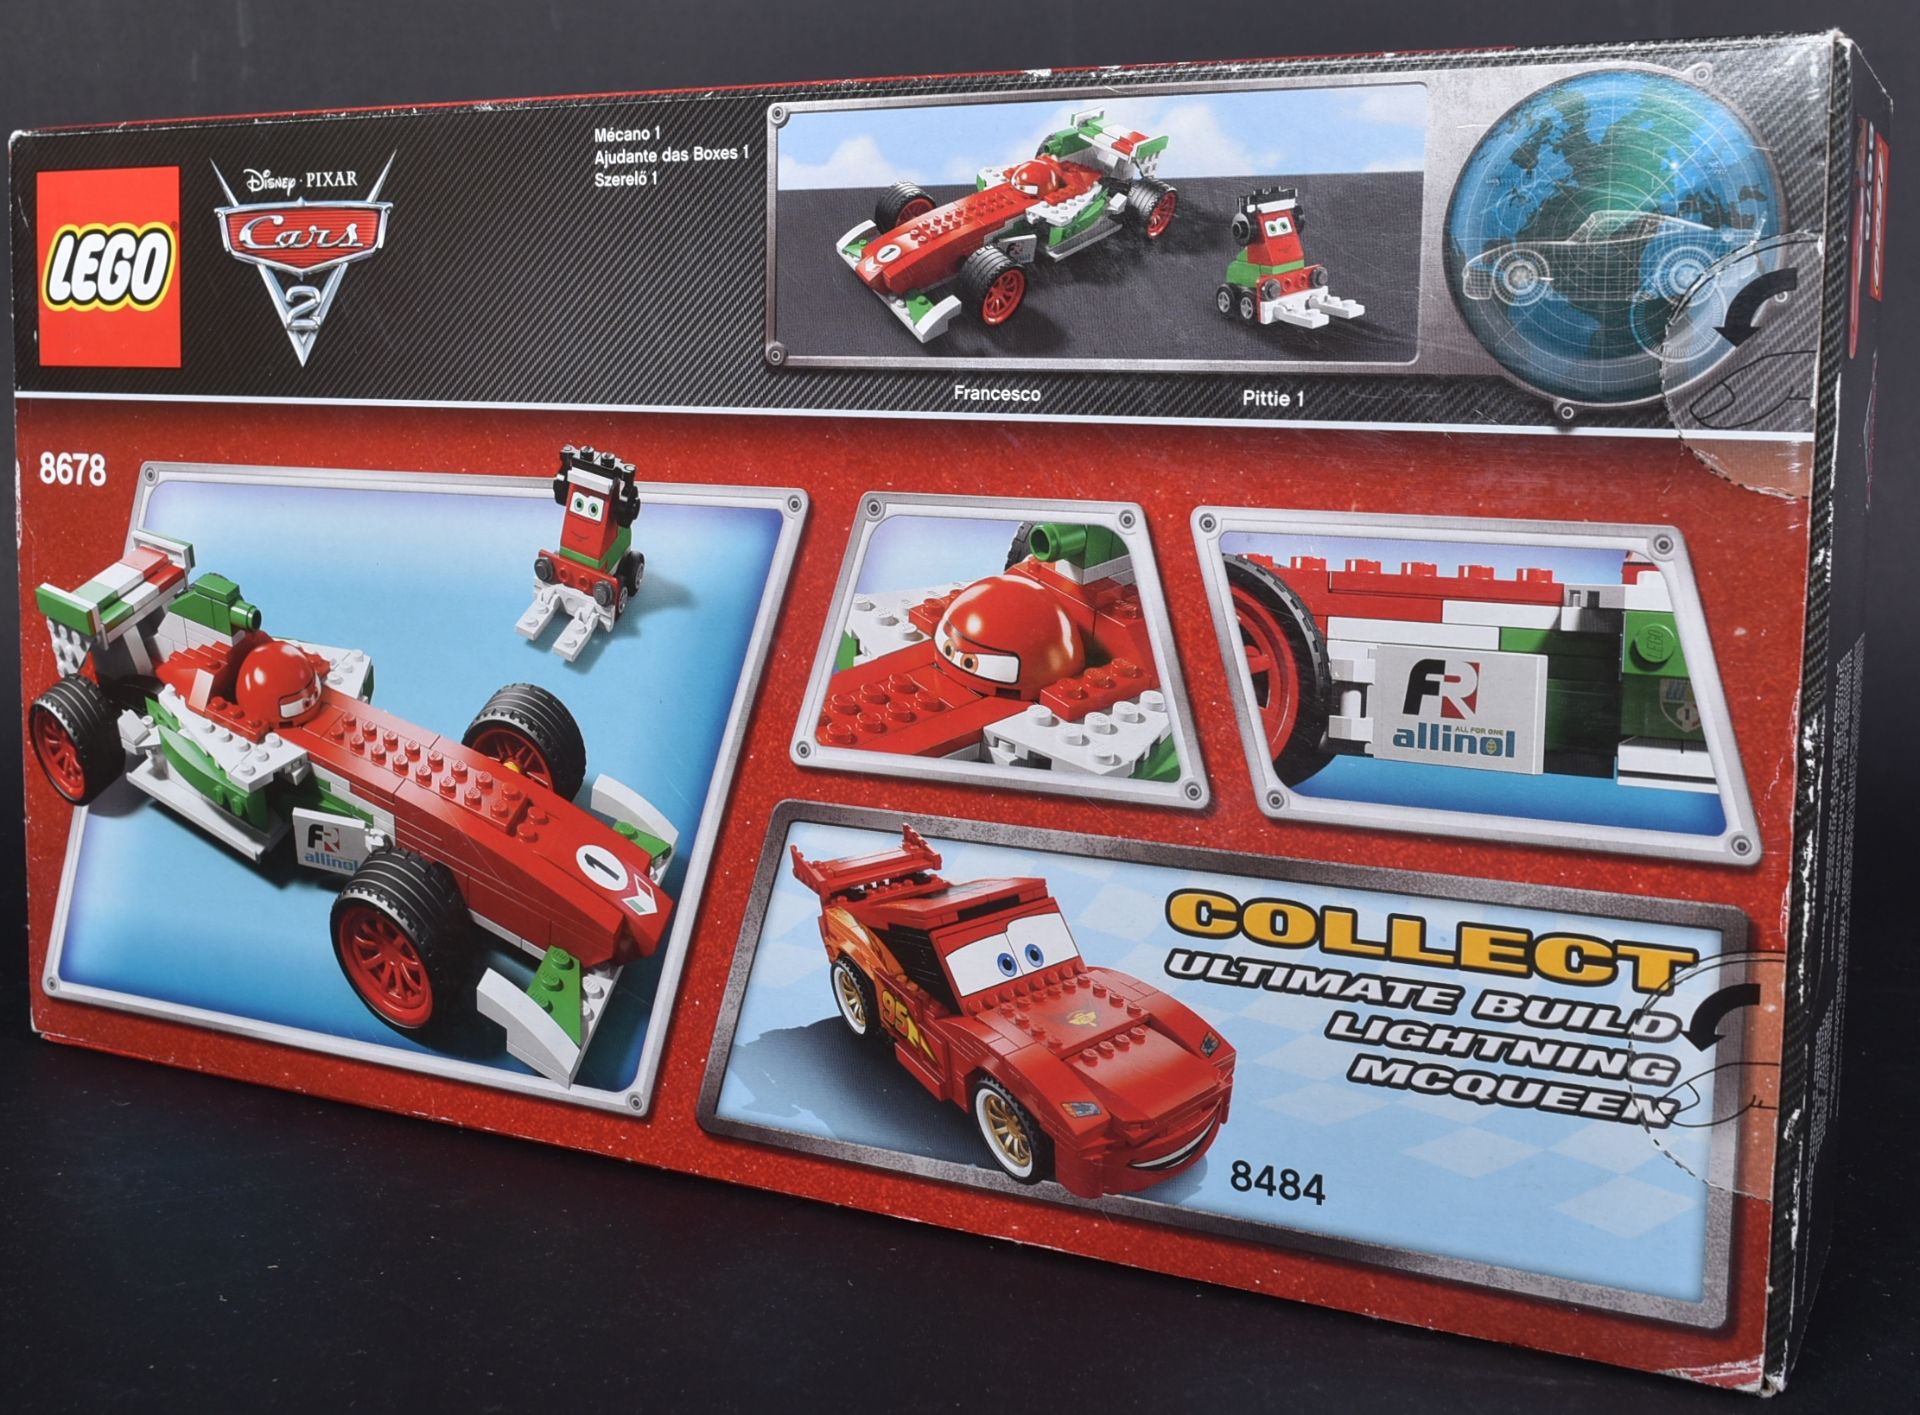 LEGO SET - PIXAR CARS - 8678 - FRANCESCO PIXAR CARS - Image 2 of 2